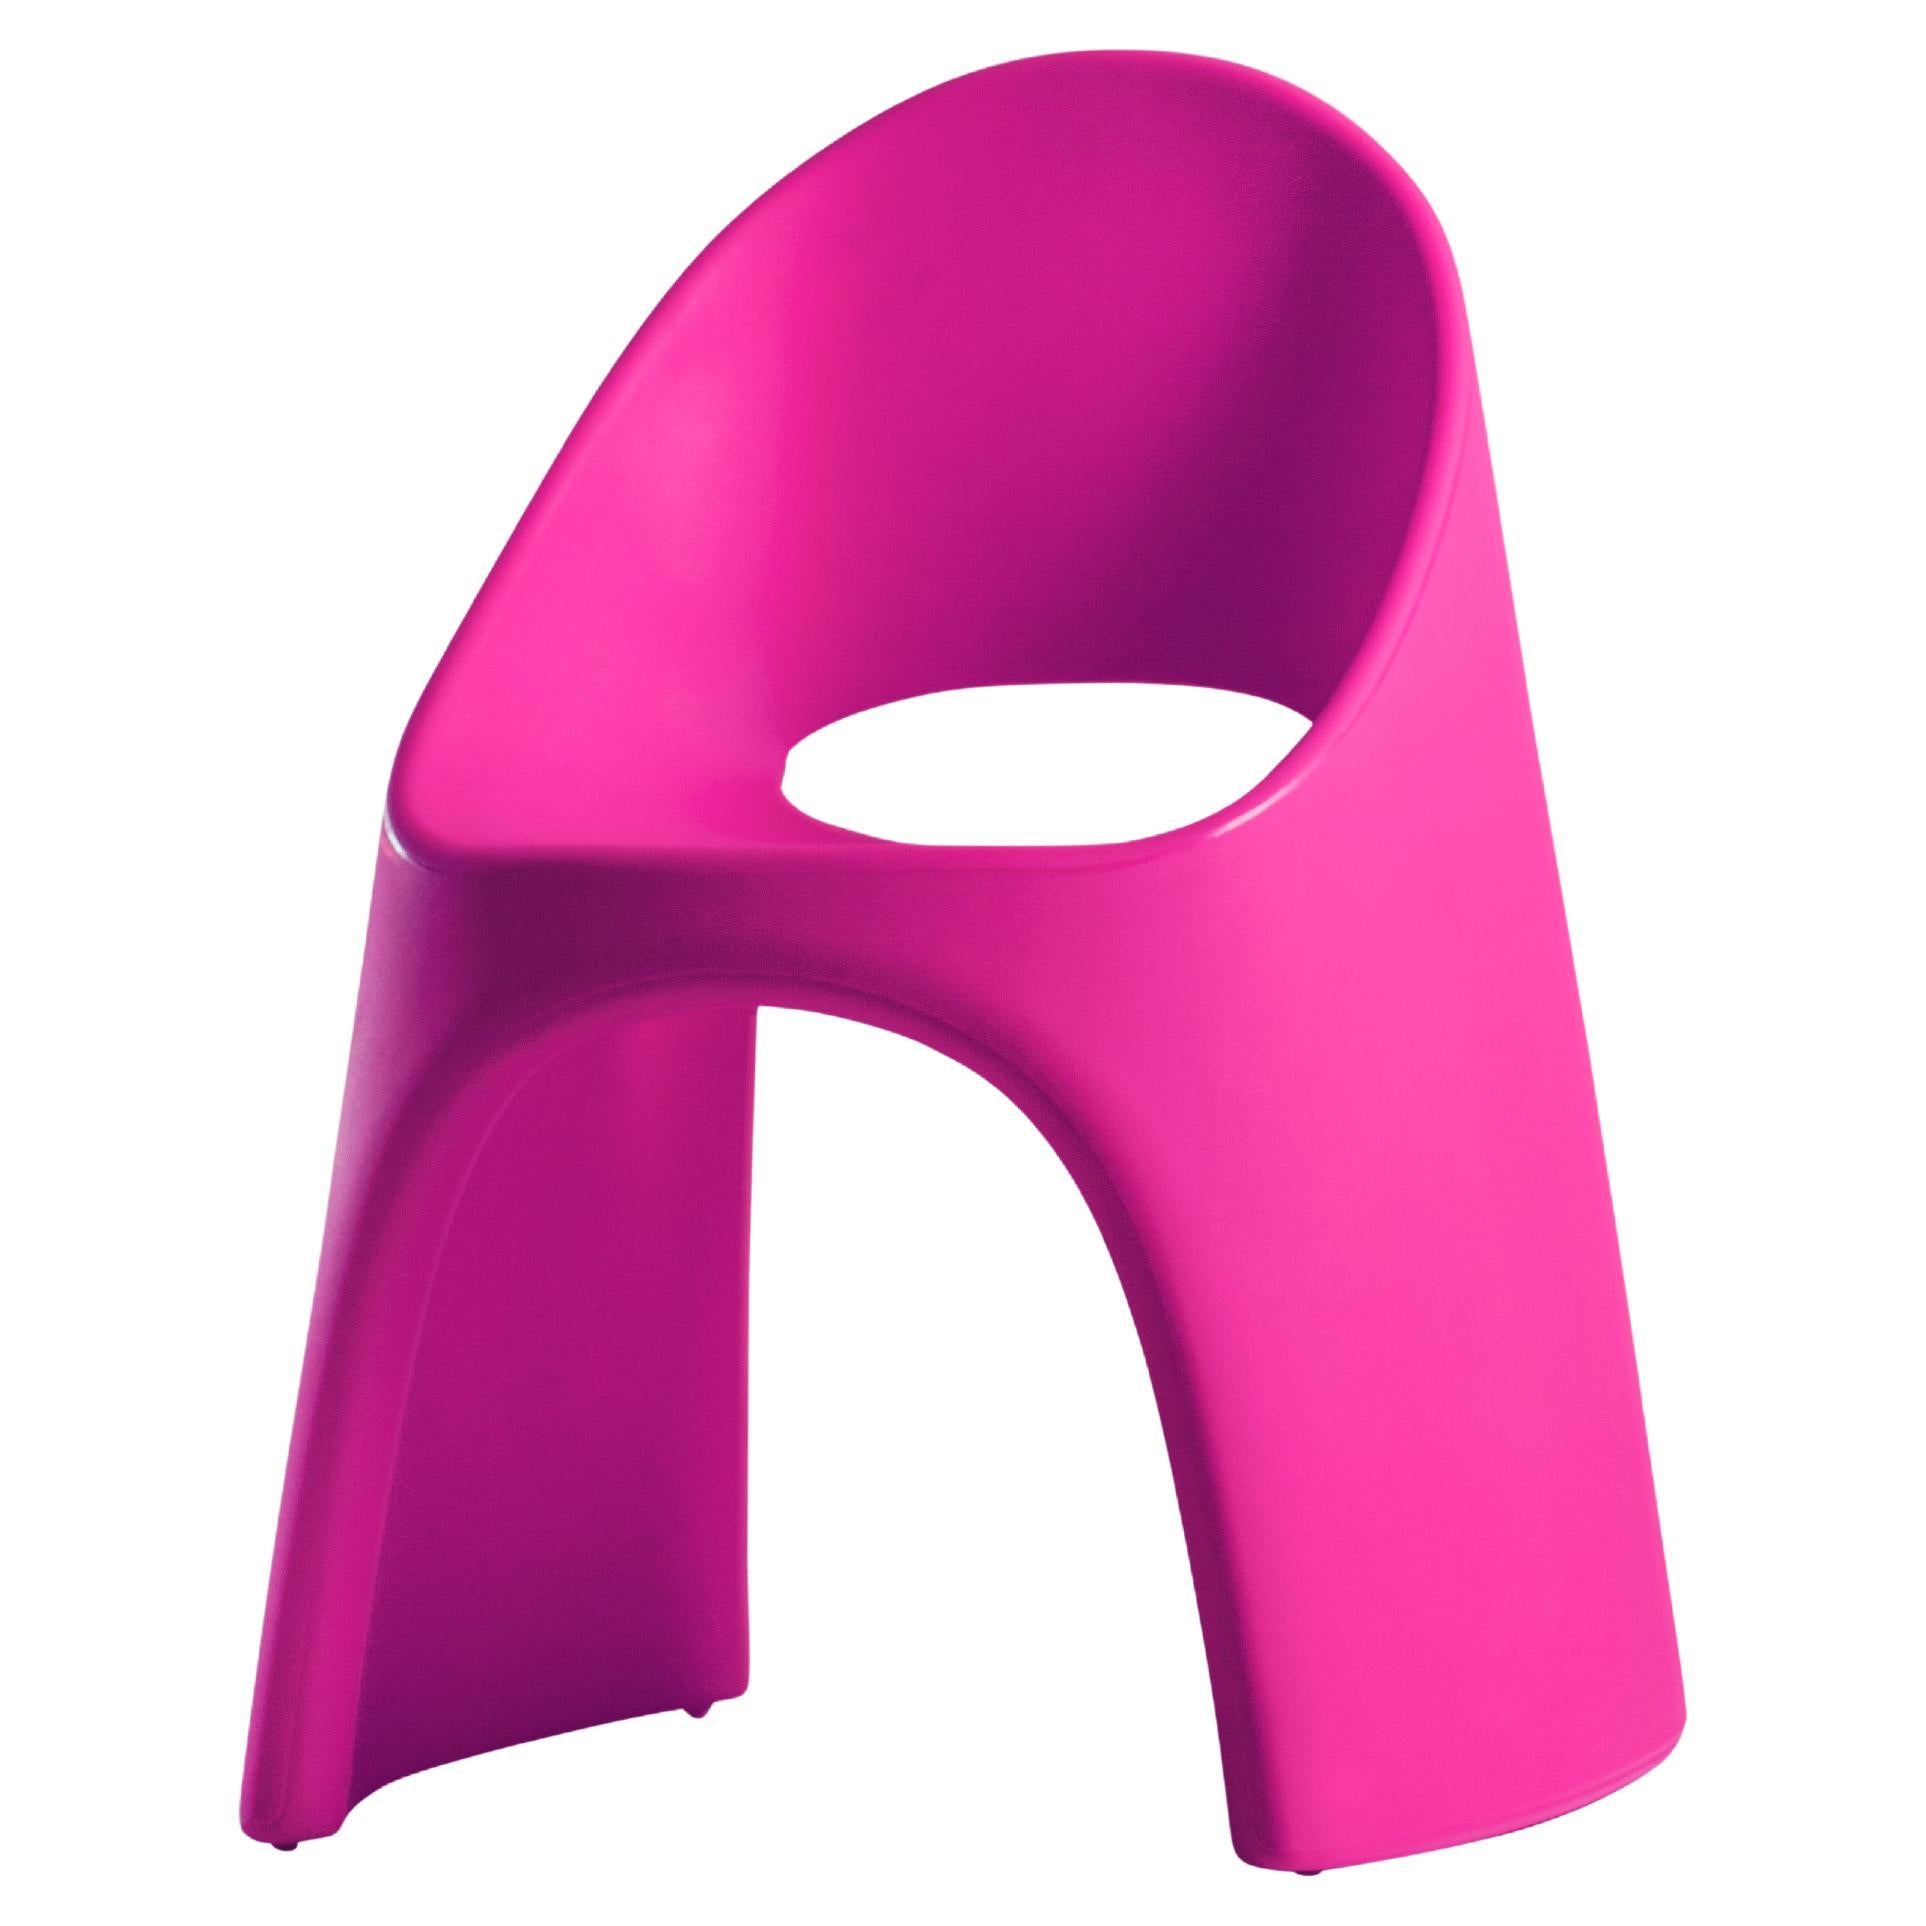 Slide Design Amélie Chair in Sweet Fuchsia by Italo Pertichini